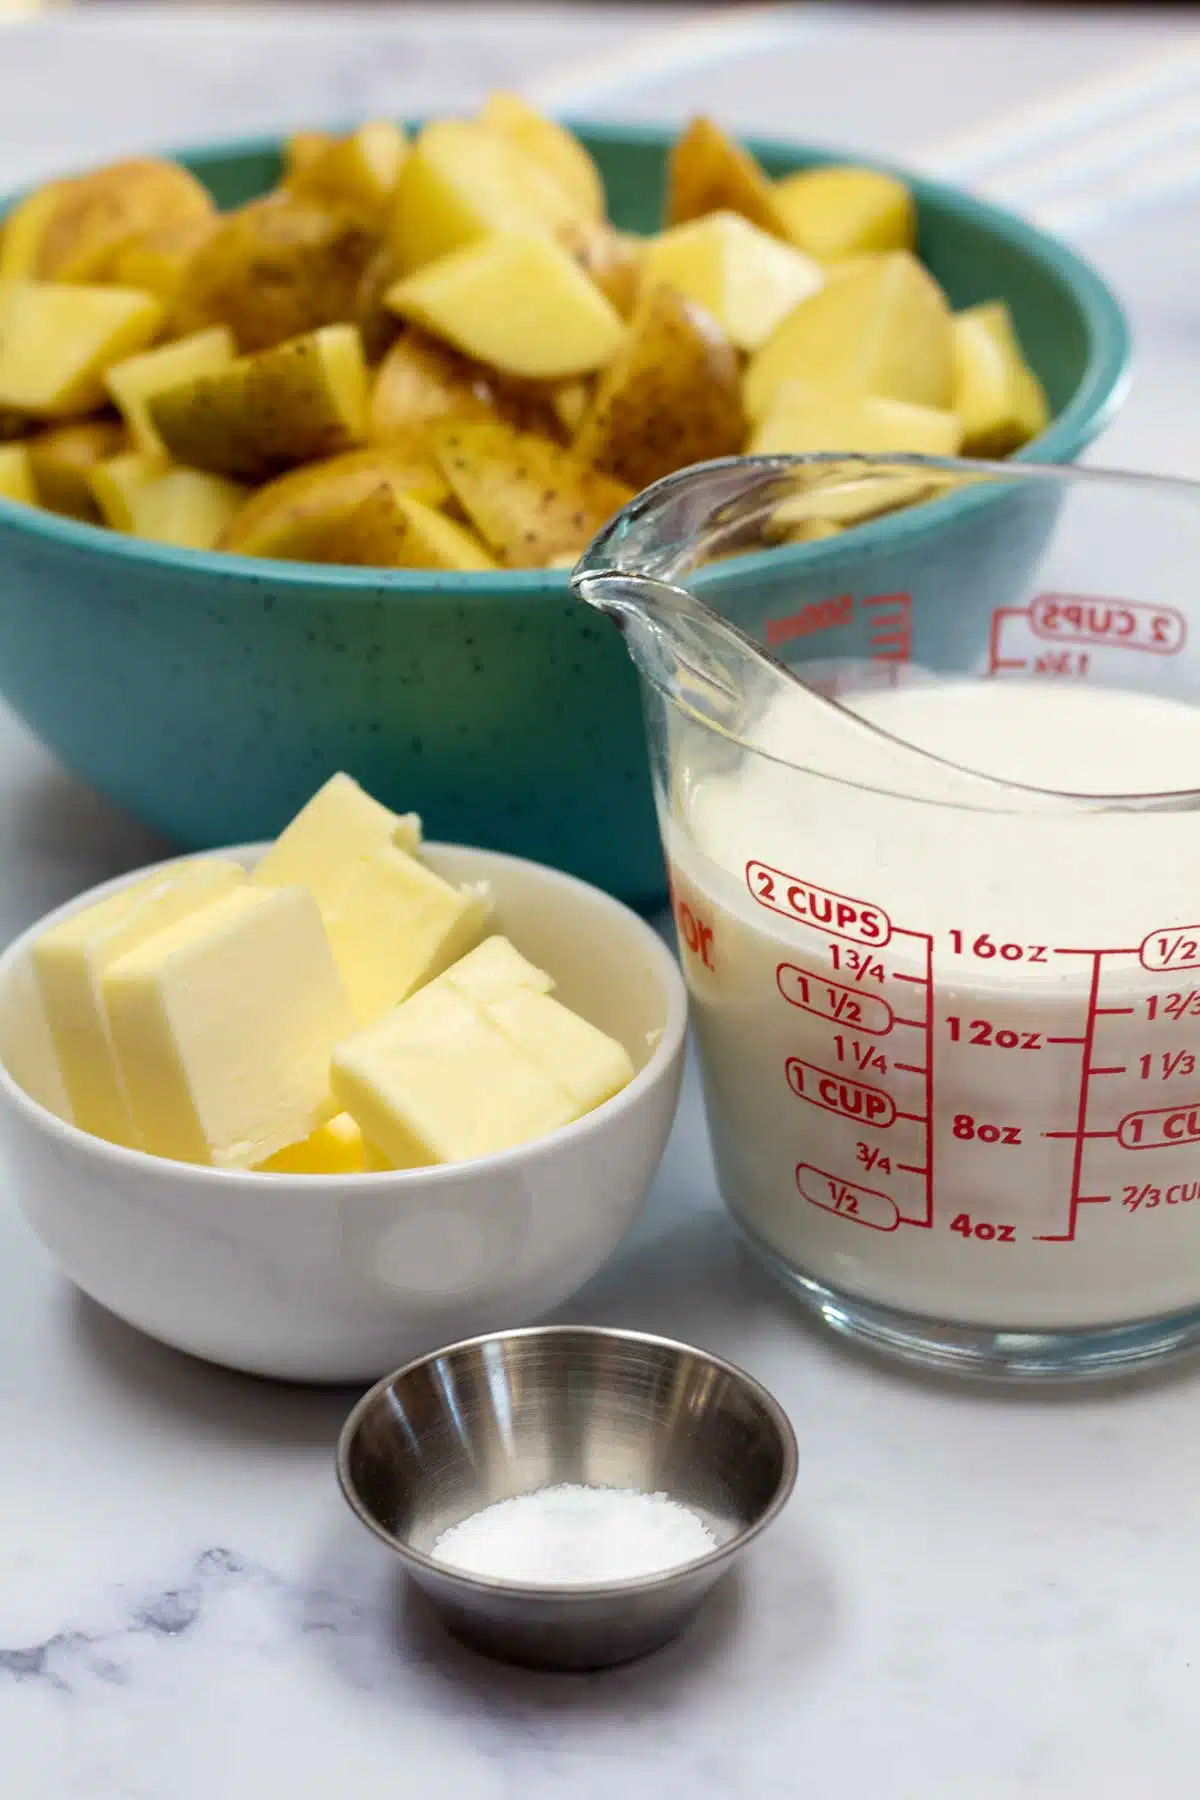 Tall image showing yellow mashed potato ingredients.